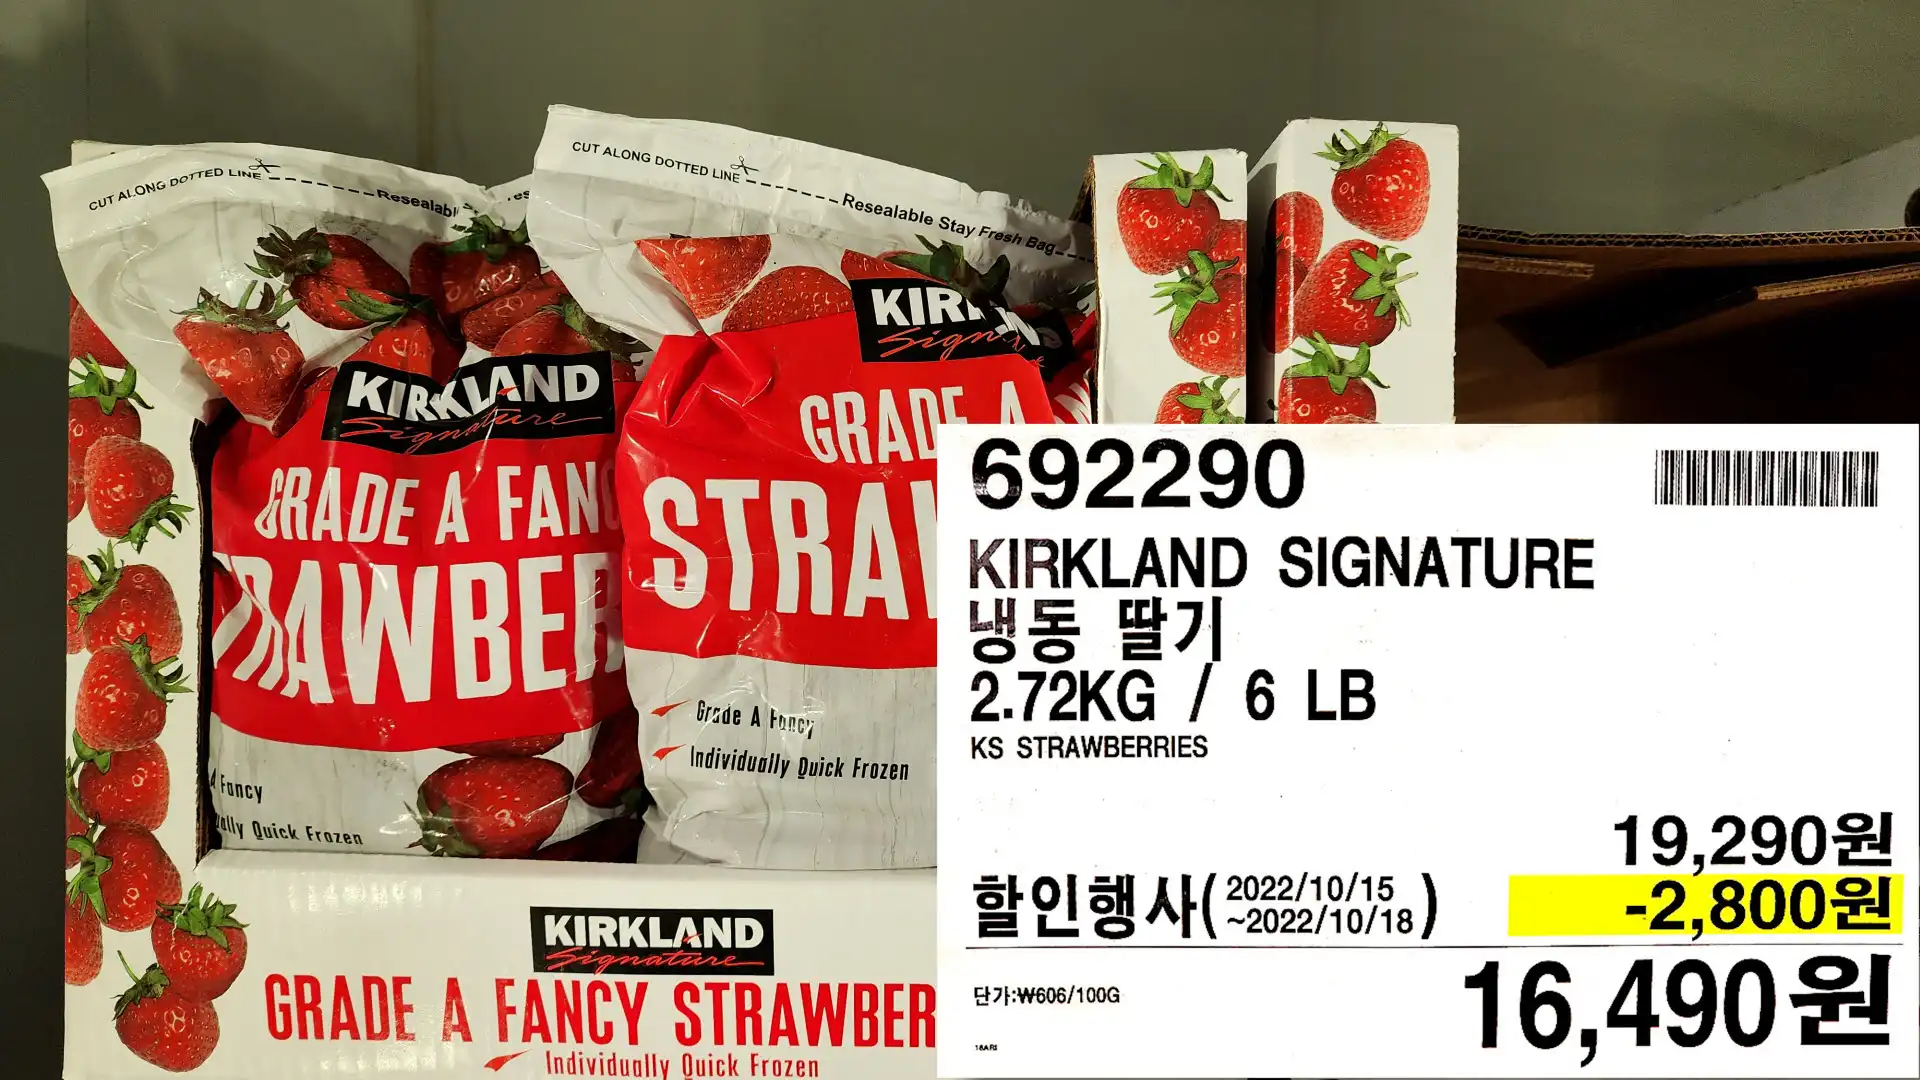 KIRKLAND SIGNATURE
냉동 딸기
2.72KG / 6 LB
KS STRAWBERRIES
16,490원